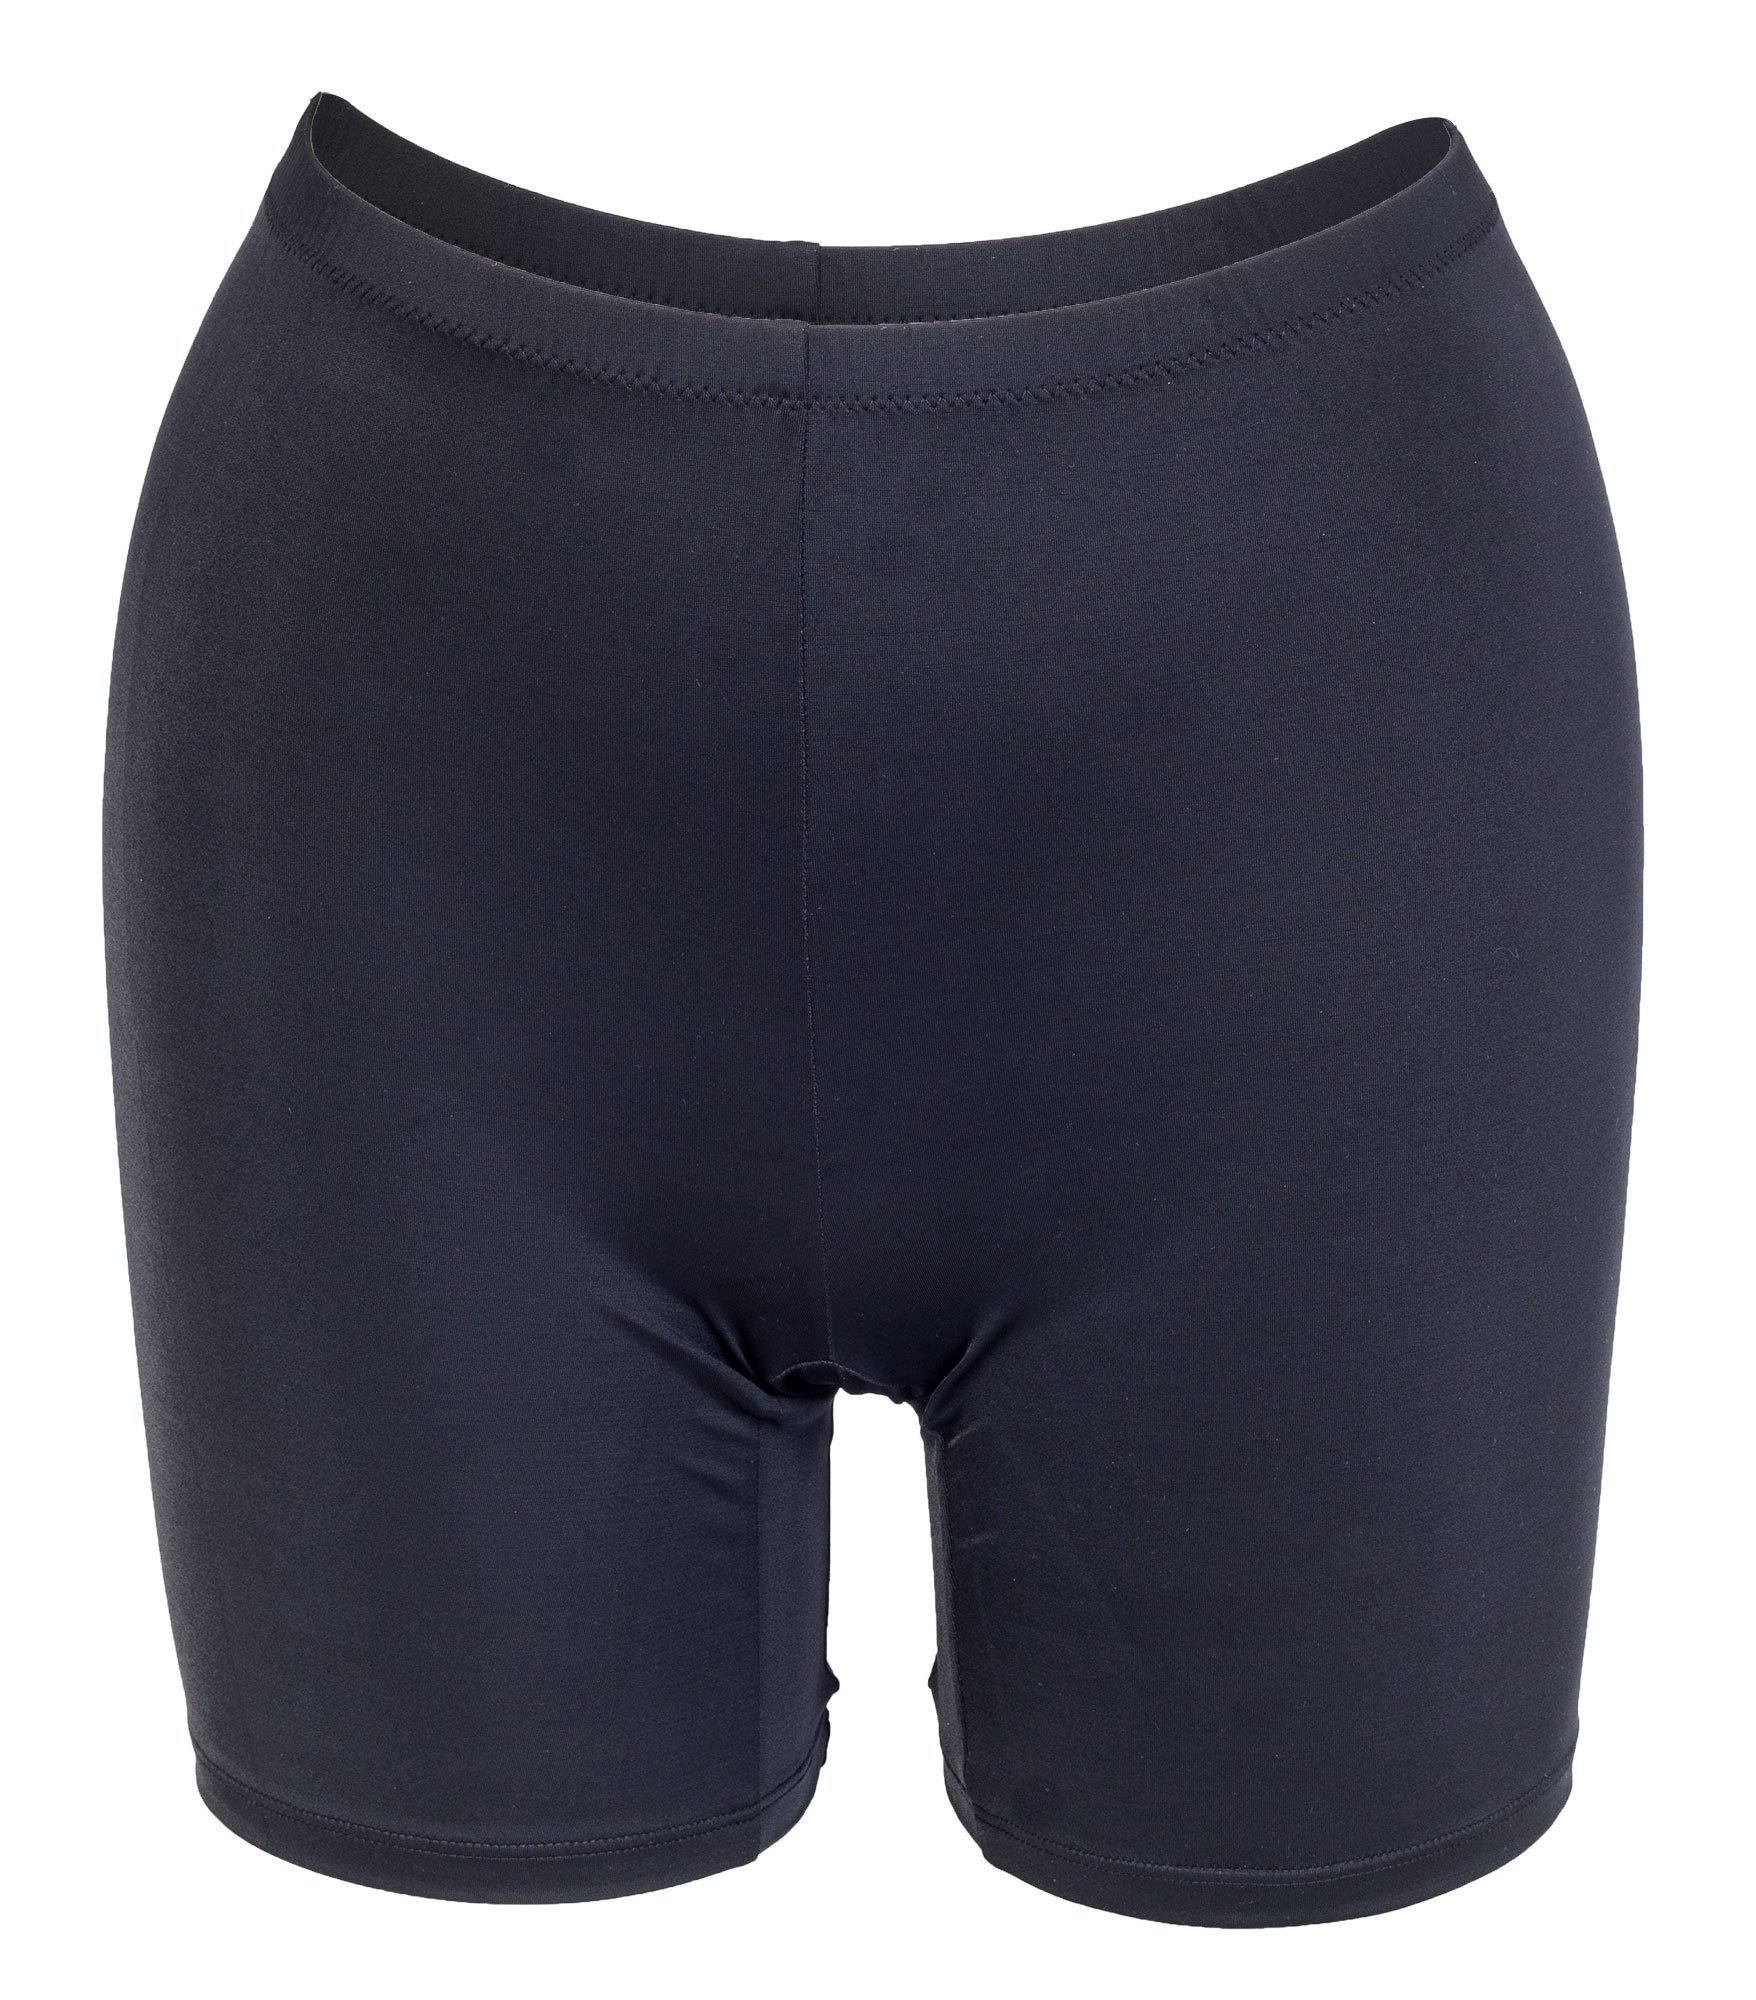 Sorte Bikini shorts i store størrelser fra Plaisir